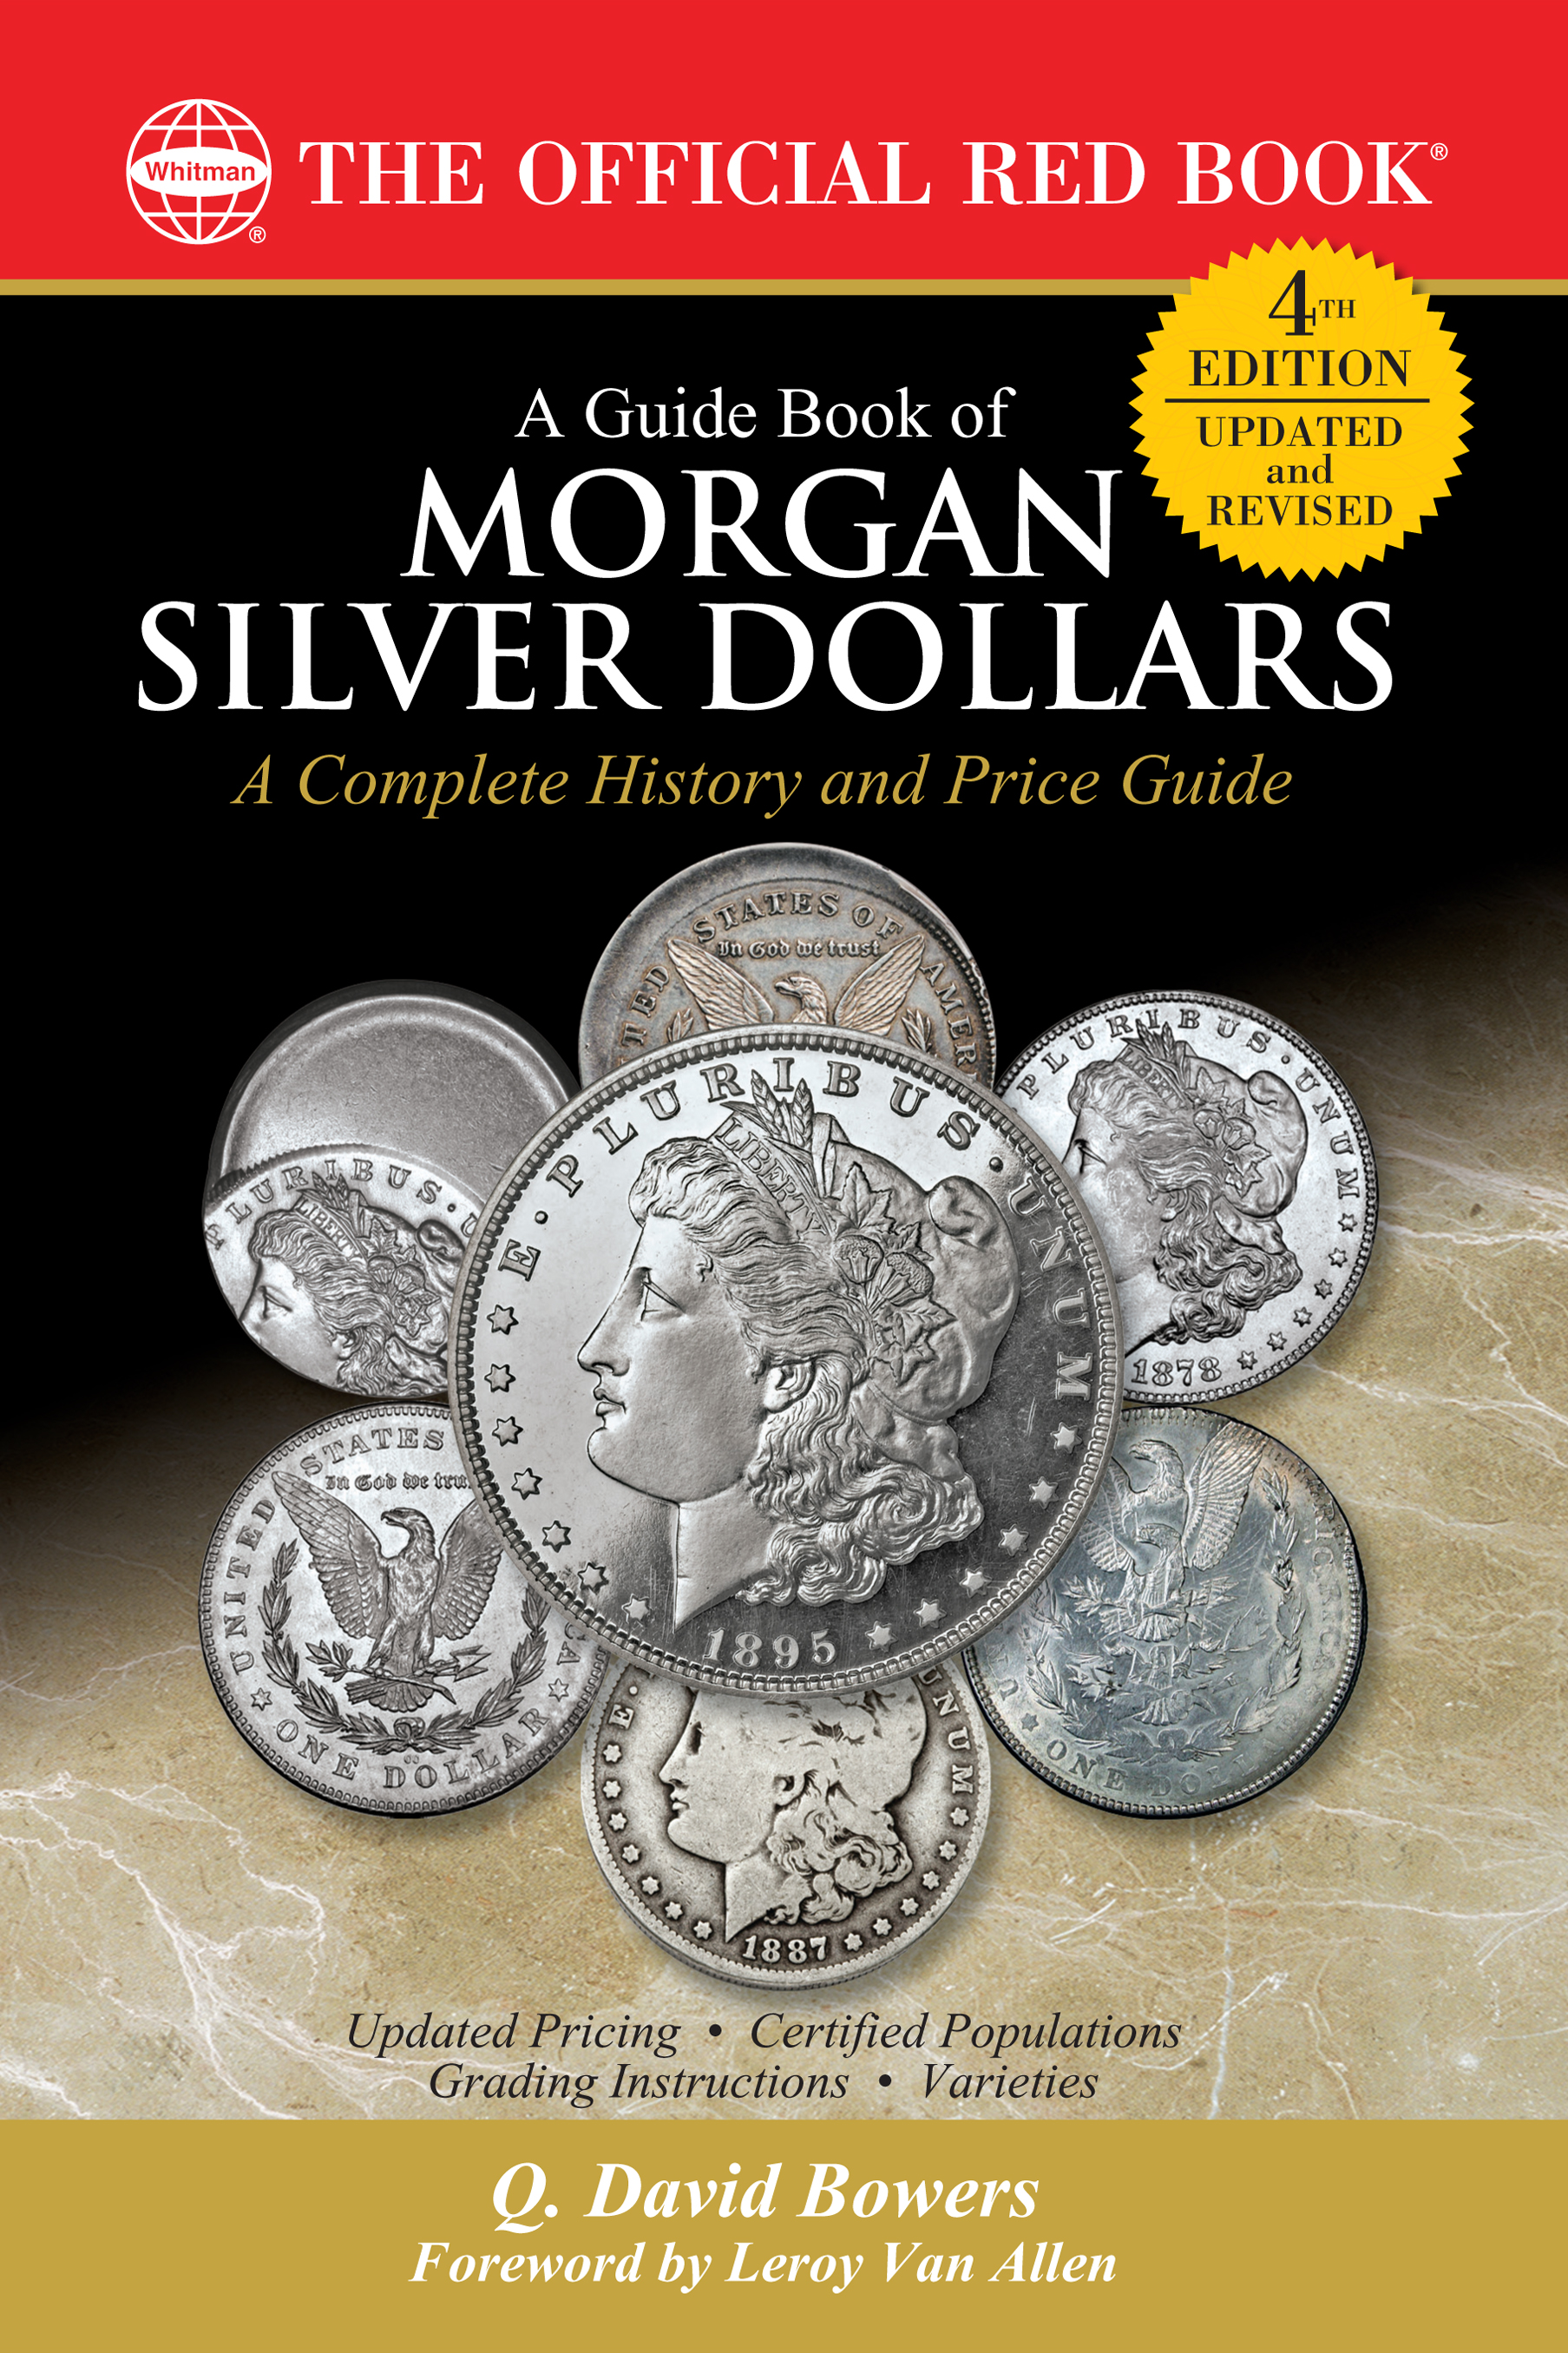 A Guide Book of Morgan Silver Dollars